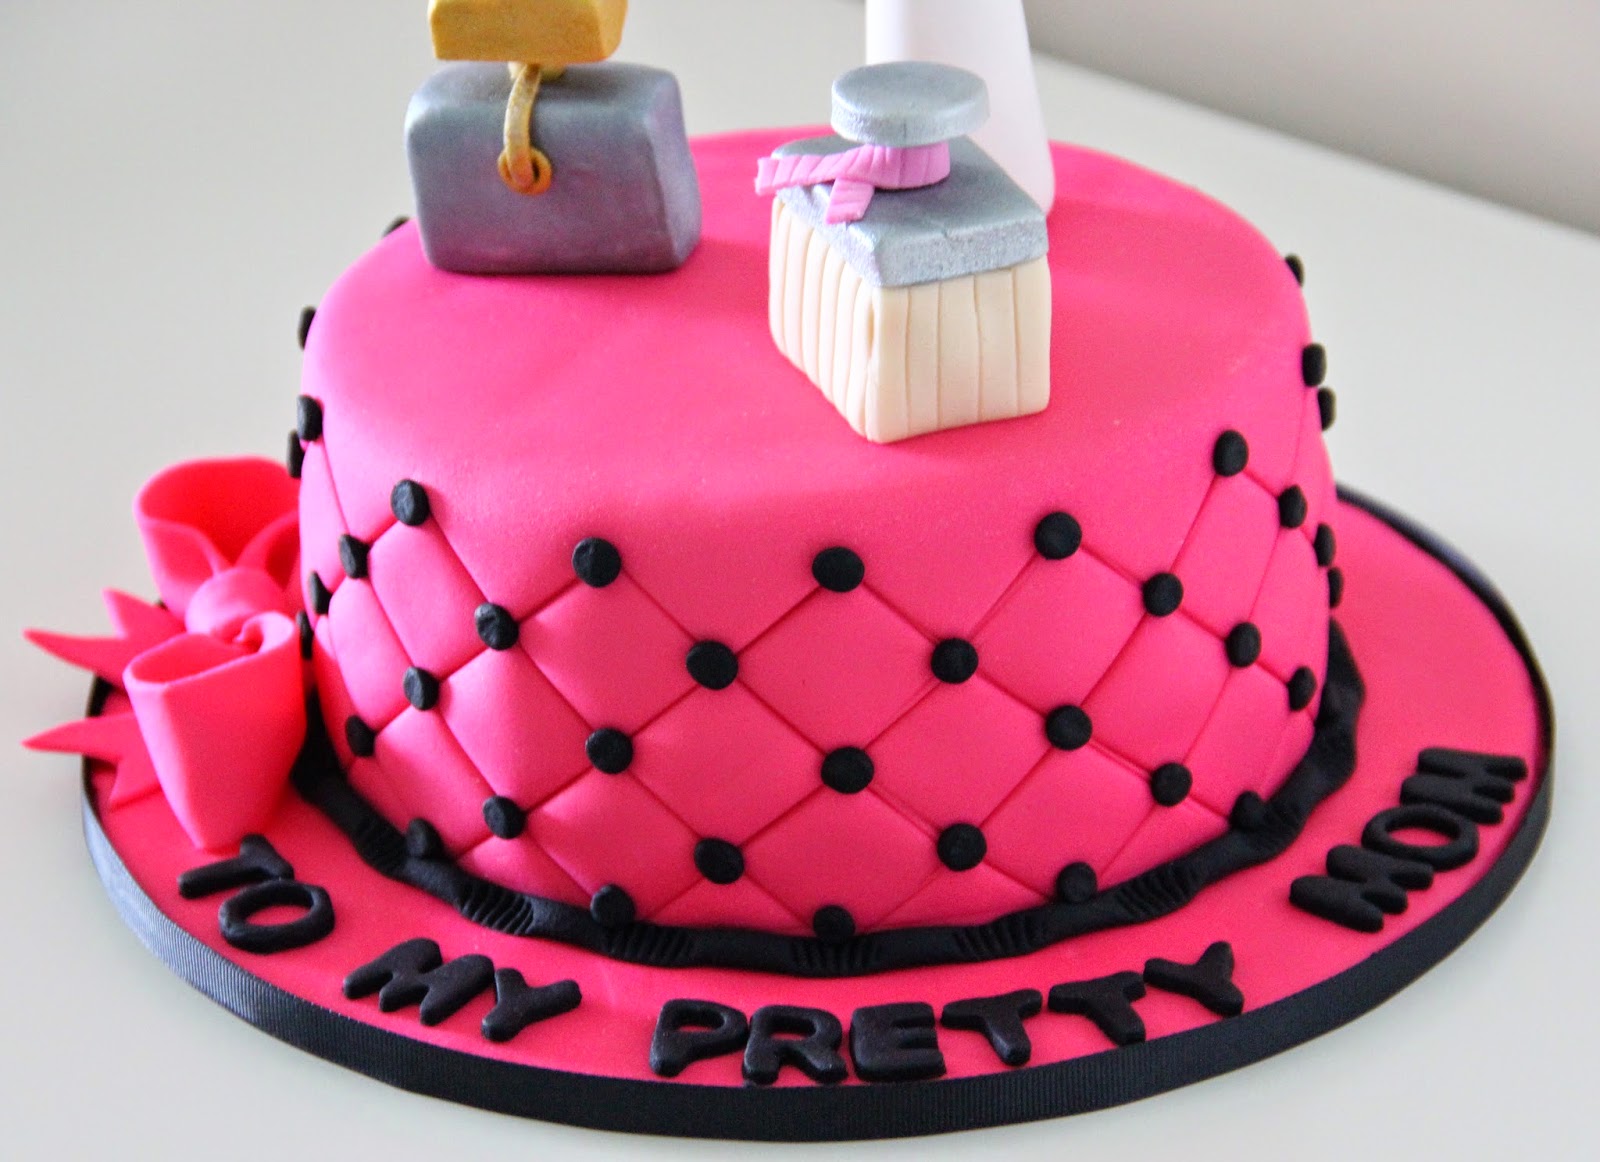 25+ Best Ideas about Girl Birthday Cakes on Pinterest ...